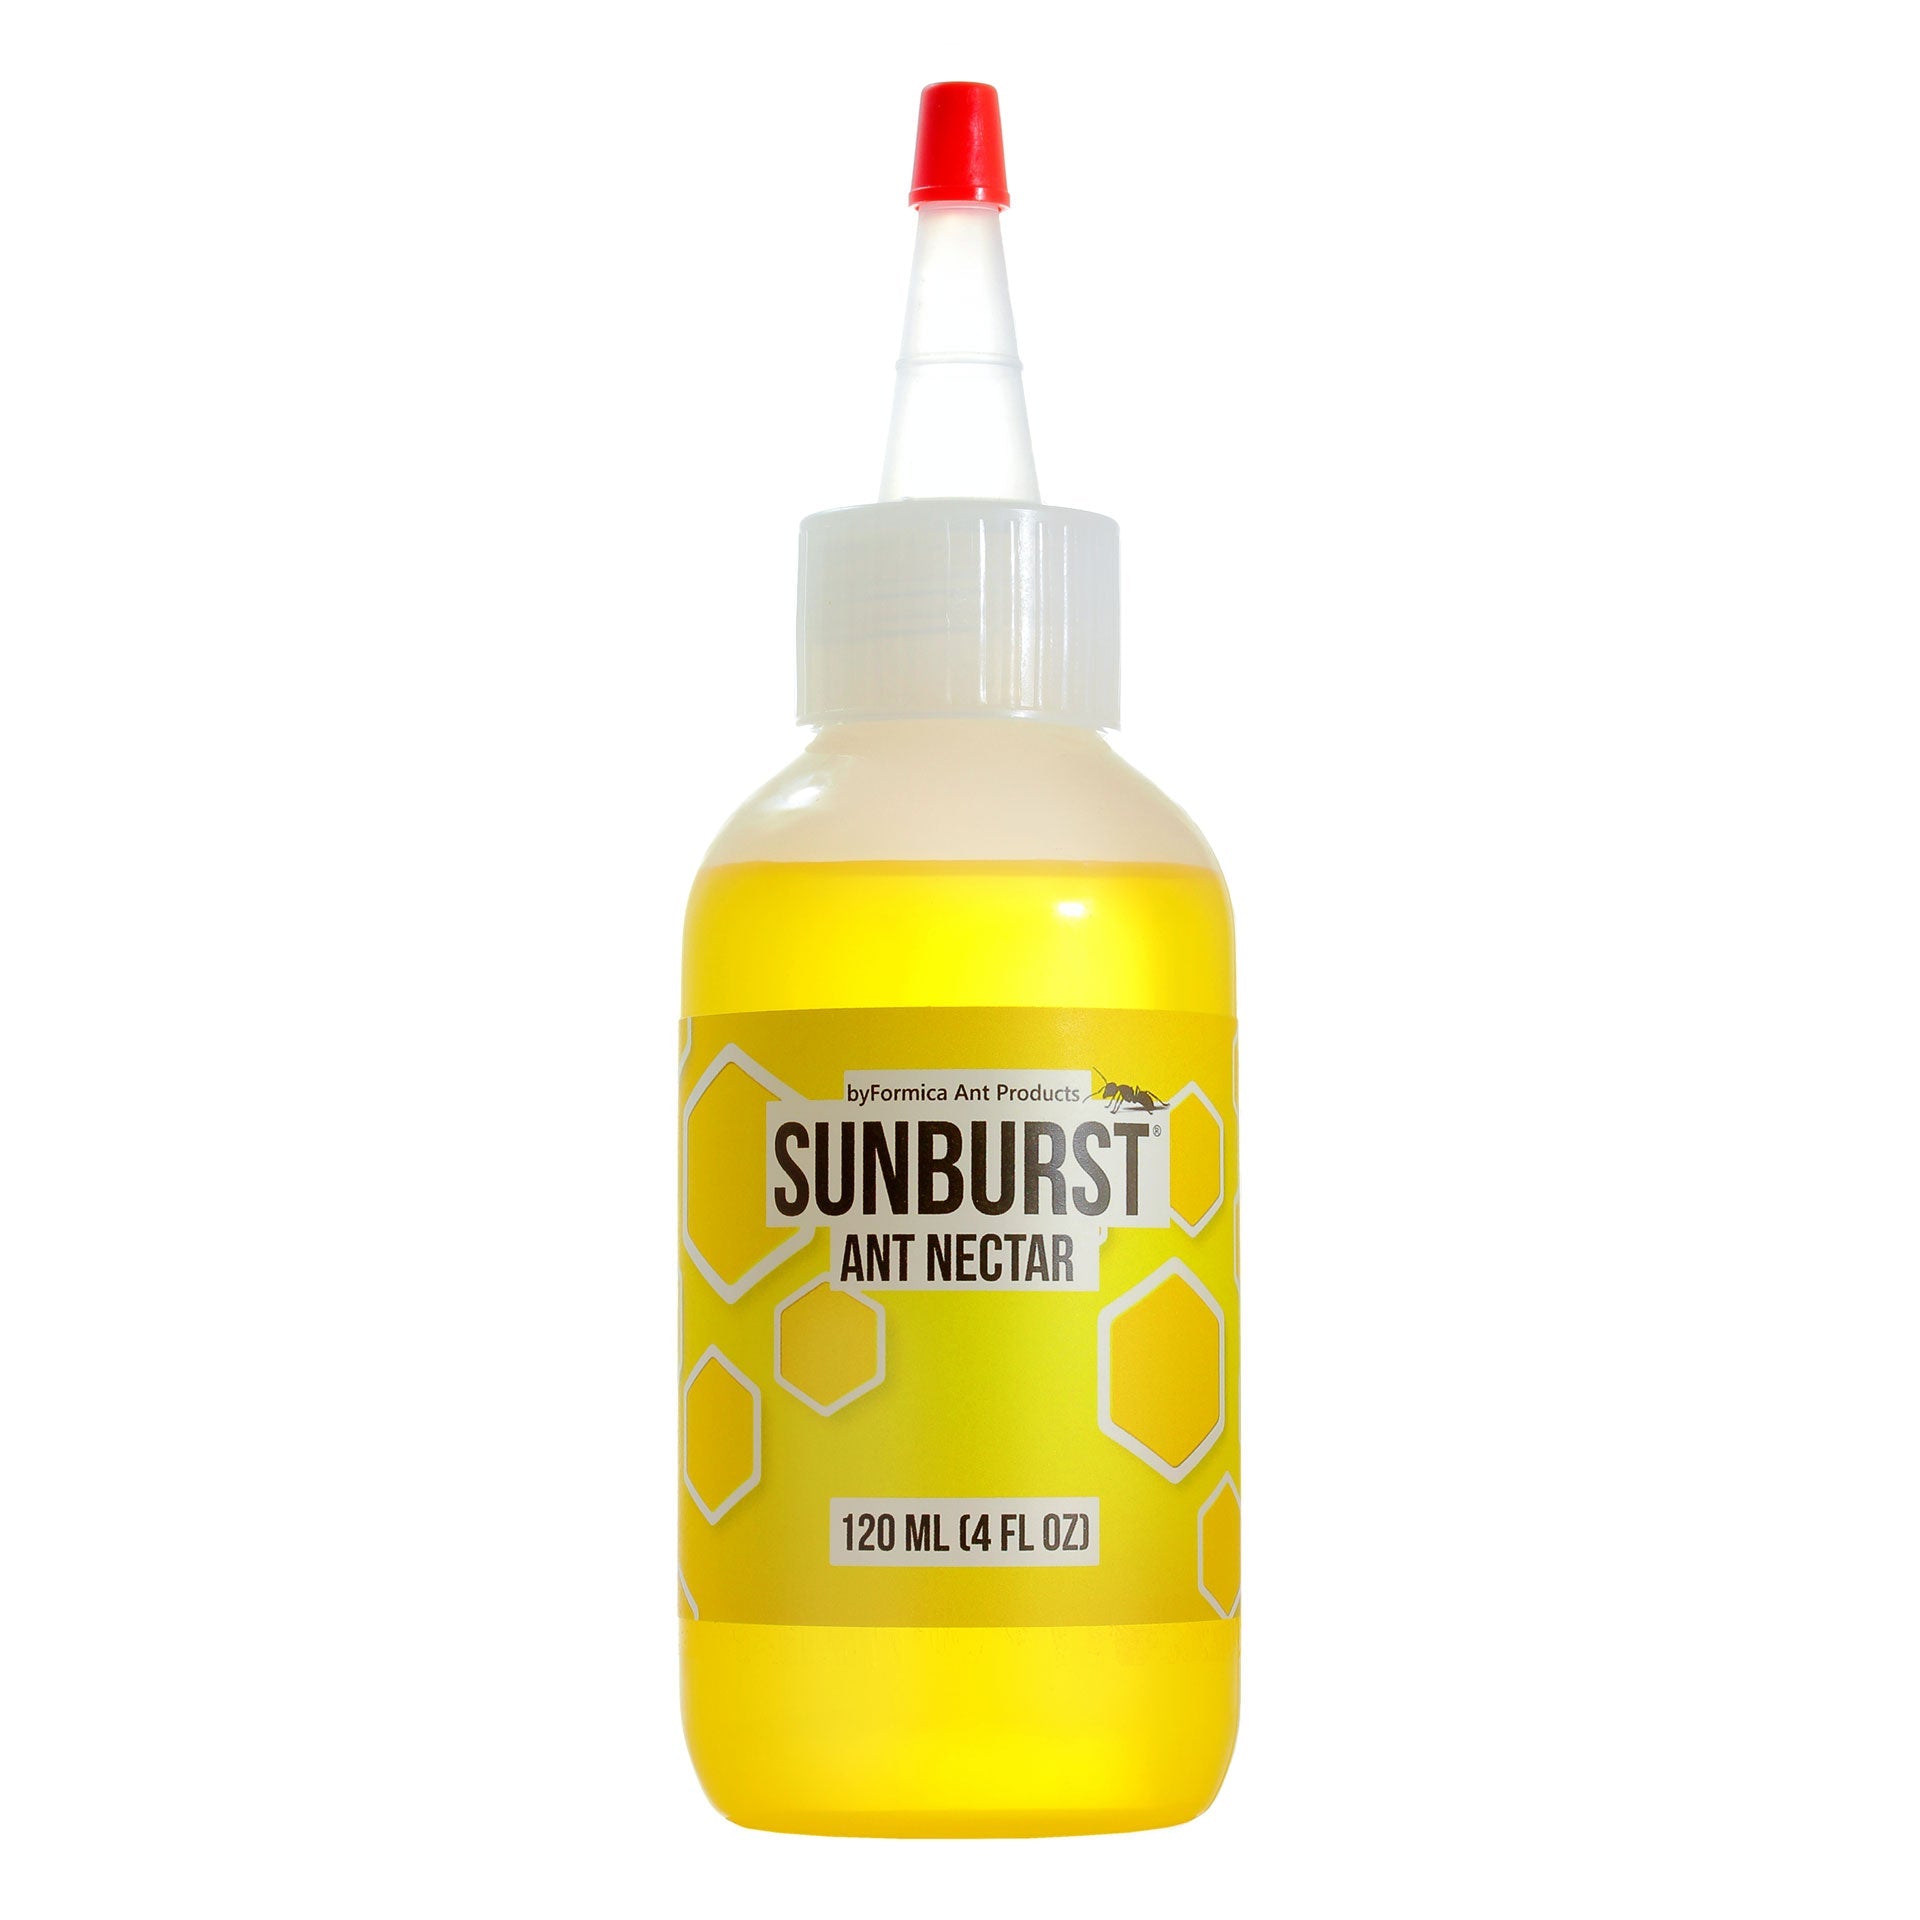 Sunburst Ant Nectar (120 ml) - AntKeepers